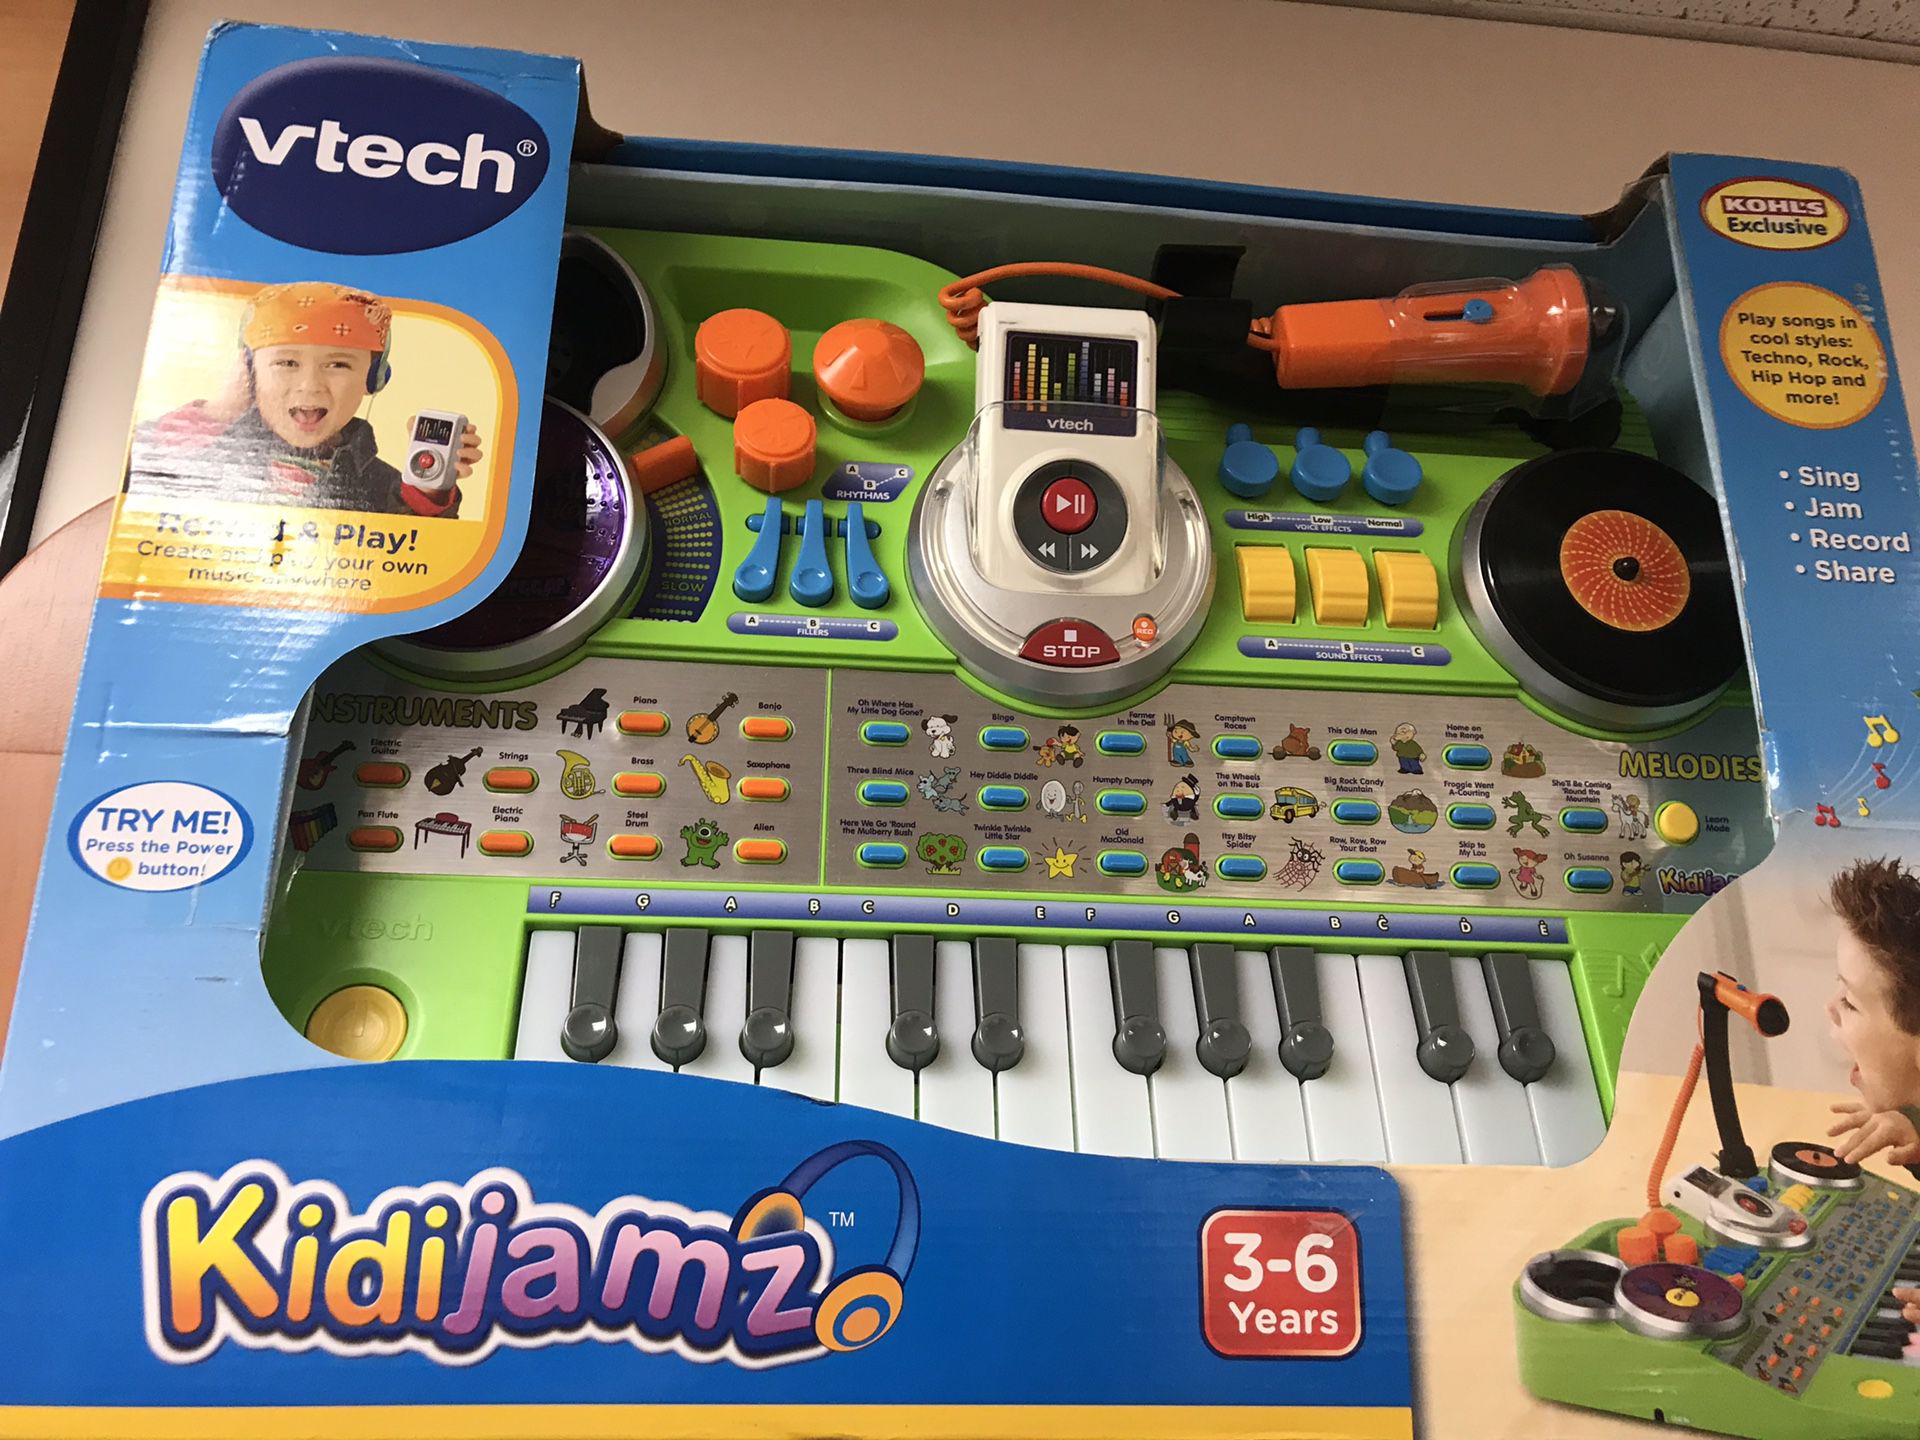 New Kidijamz Studio keyboard piano Microphone Music Recorder MP3 player.